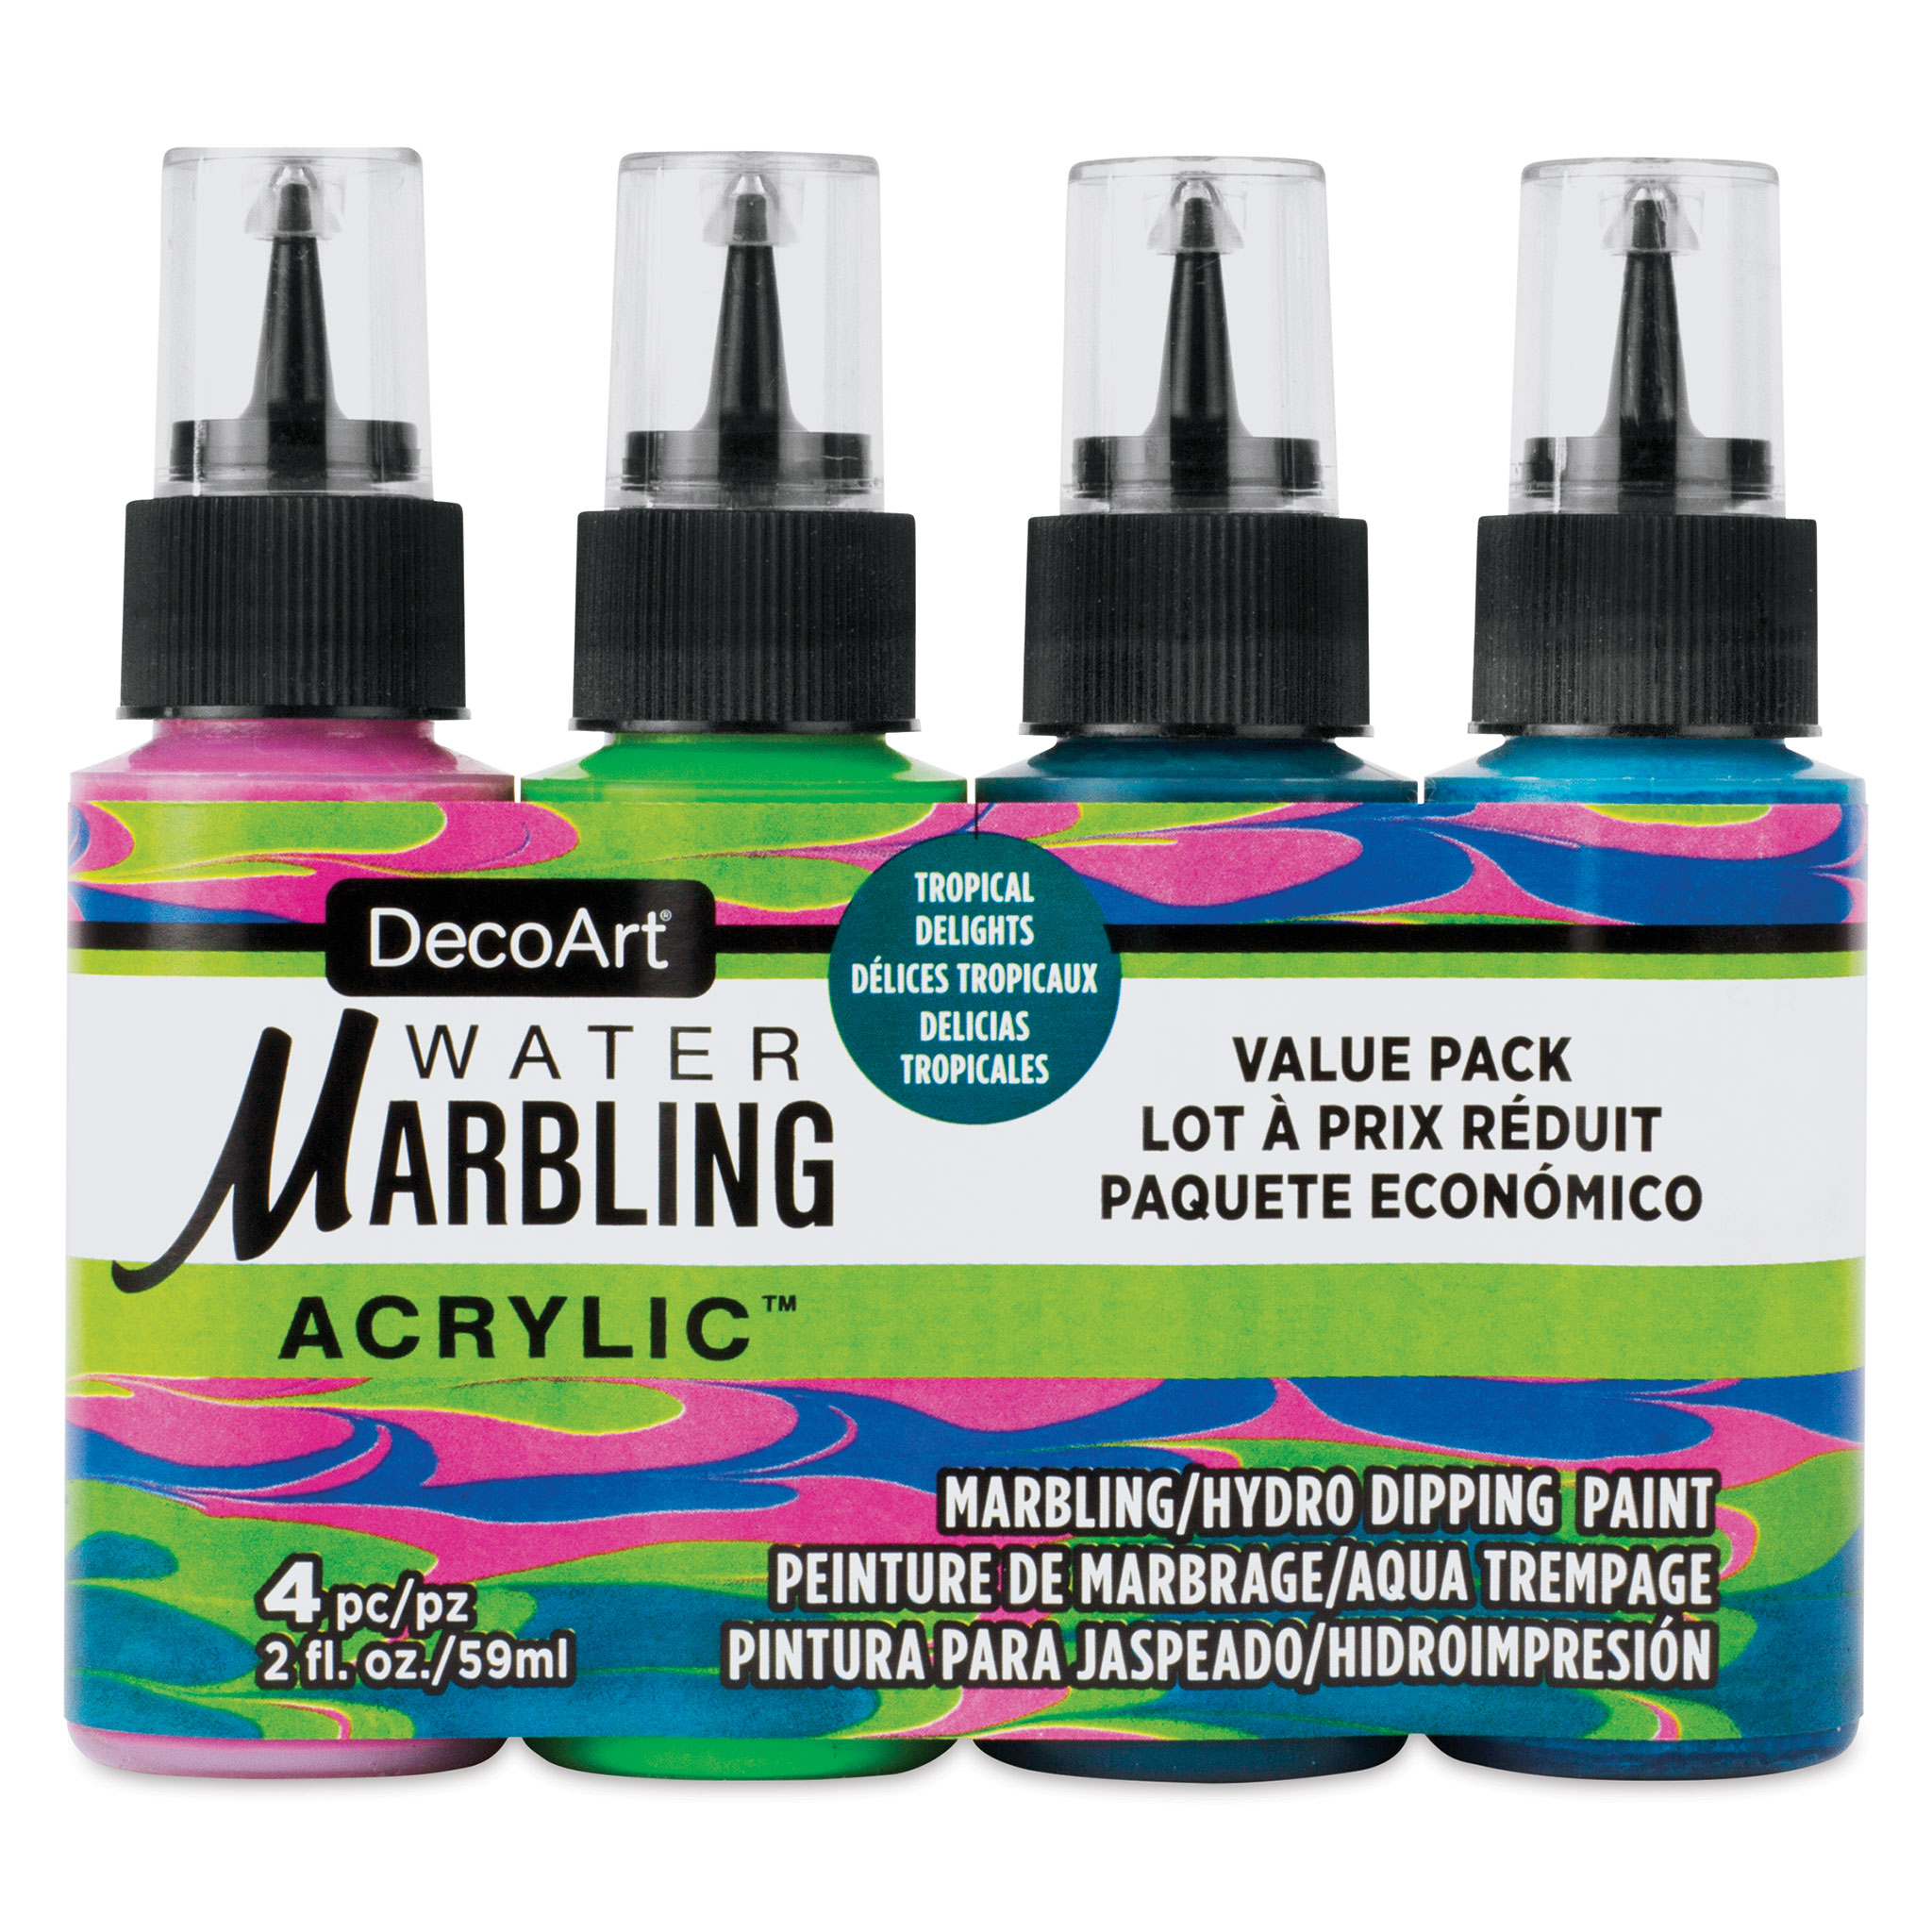 DecoArt Water Marbling Acrylics